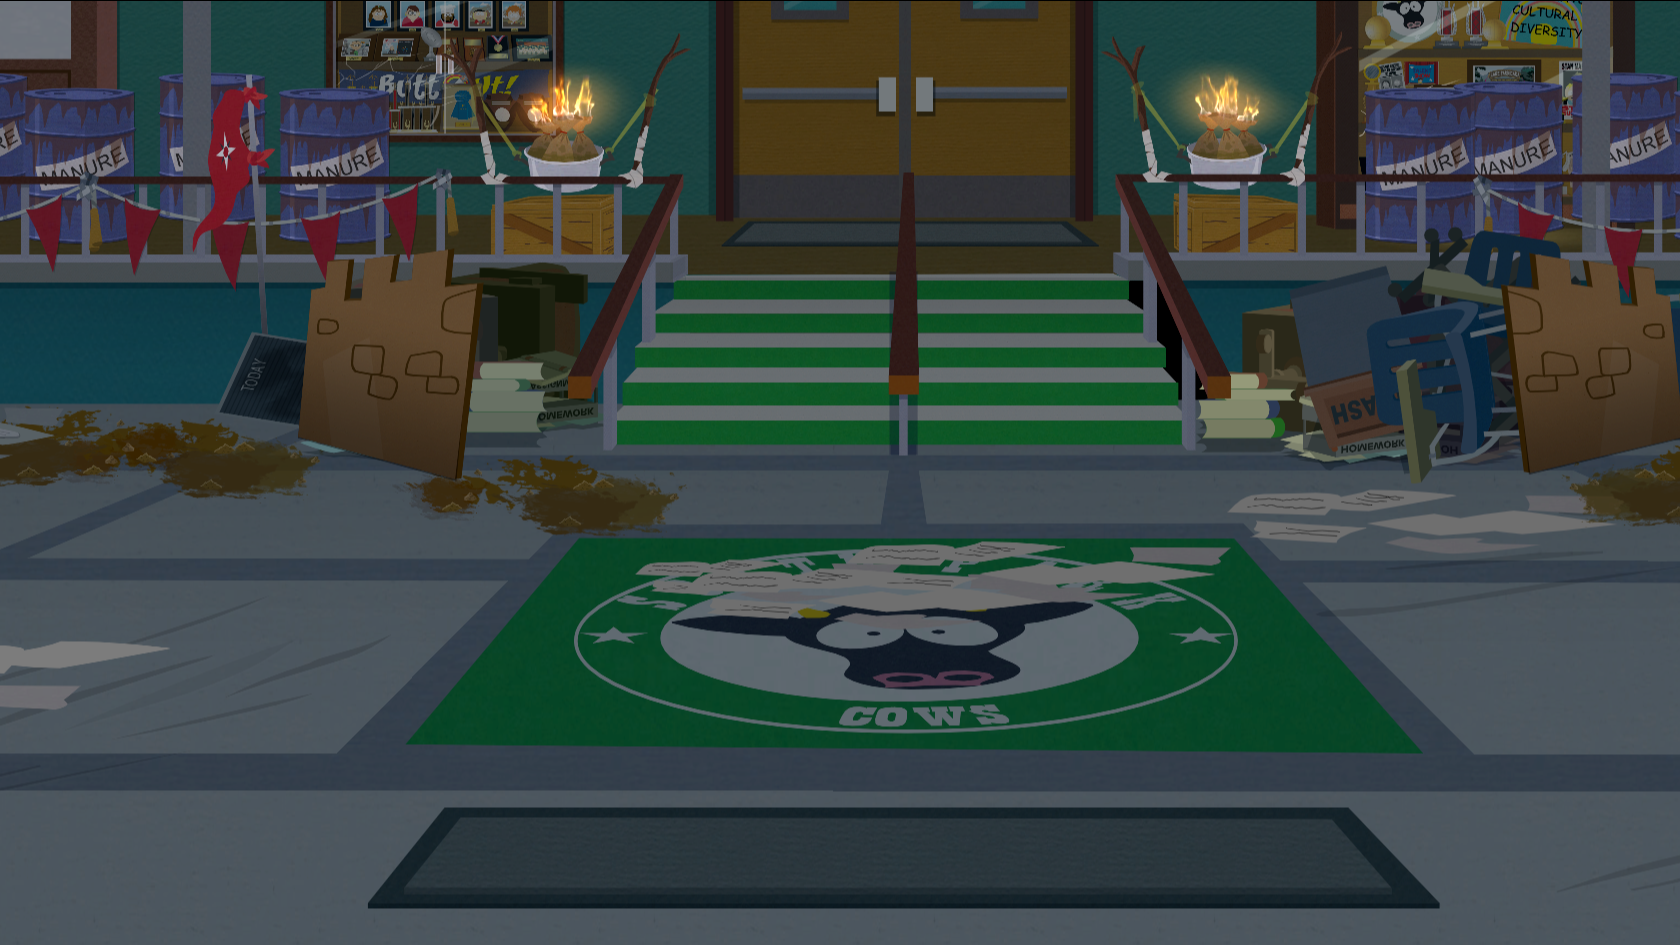 South Park School Lobby (SoT BG) by RoamingBerry on DeviantArt